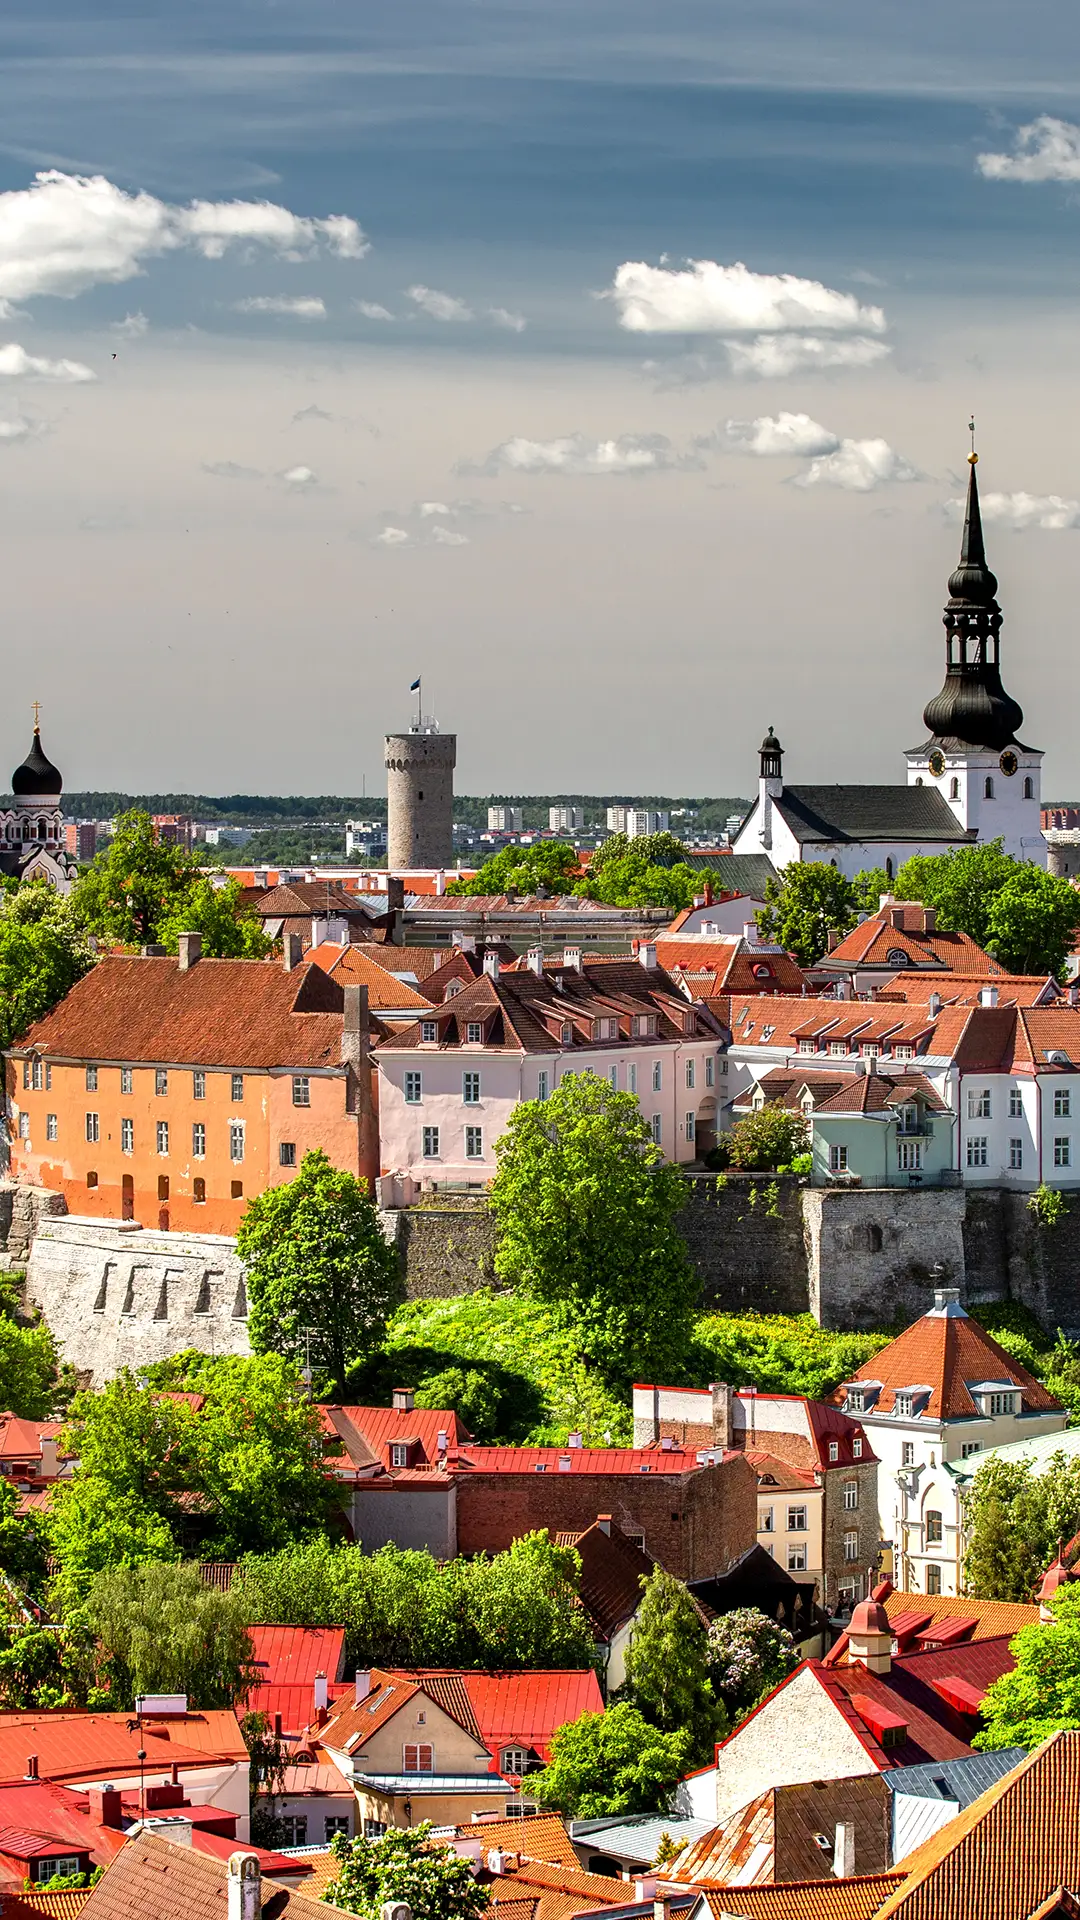 View of Old Town Tallinn.